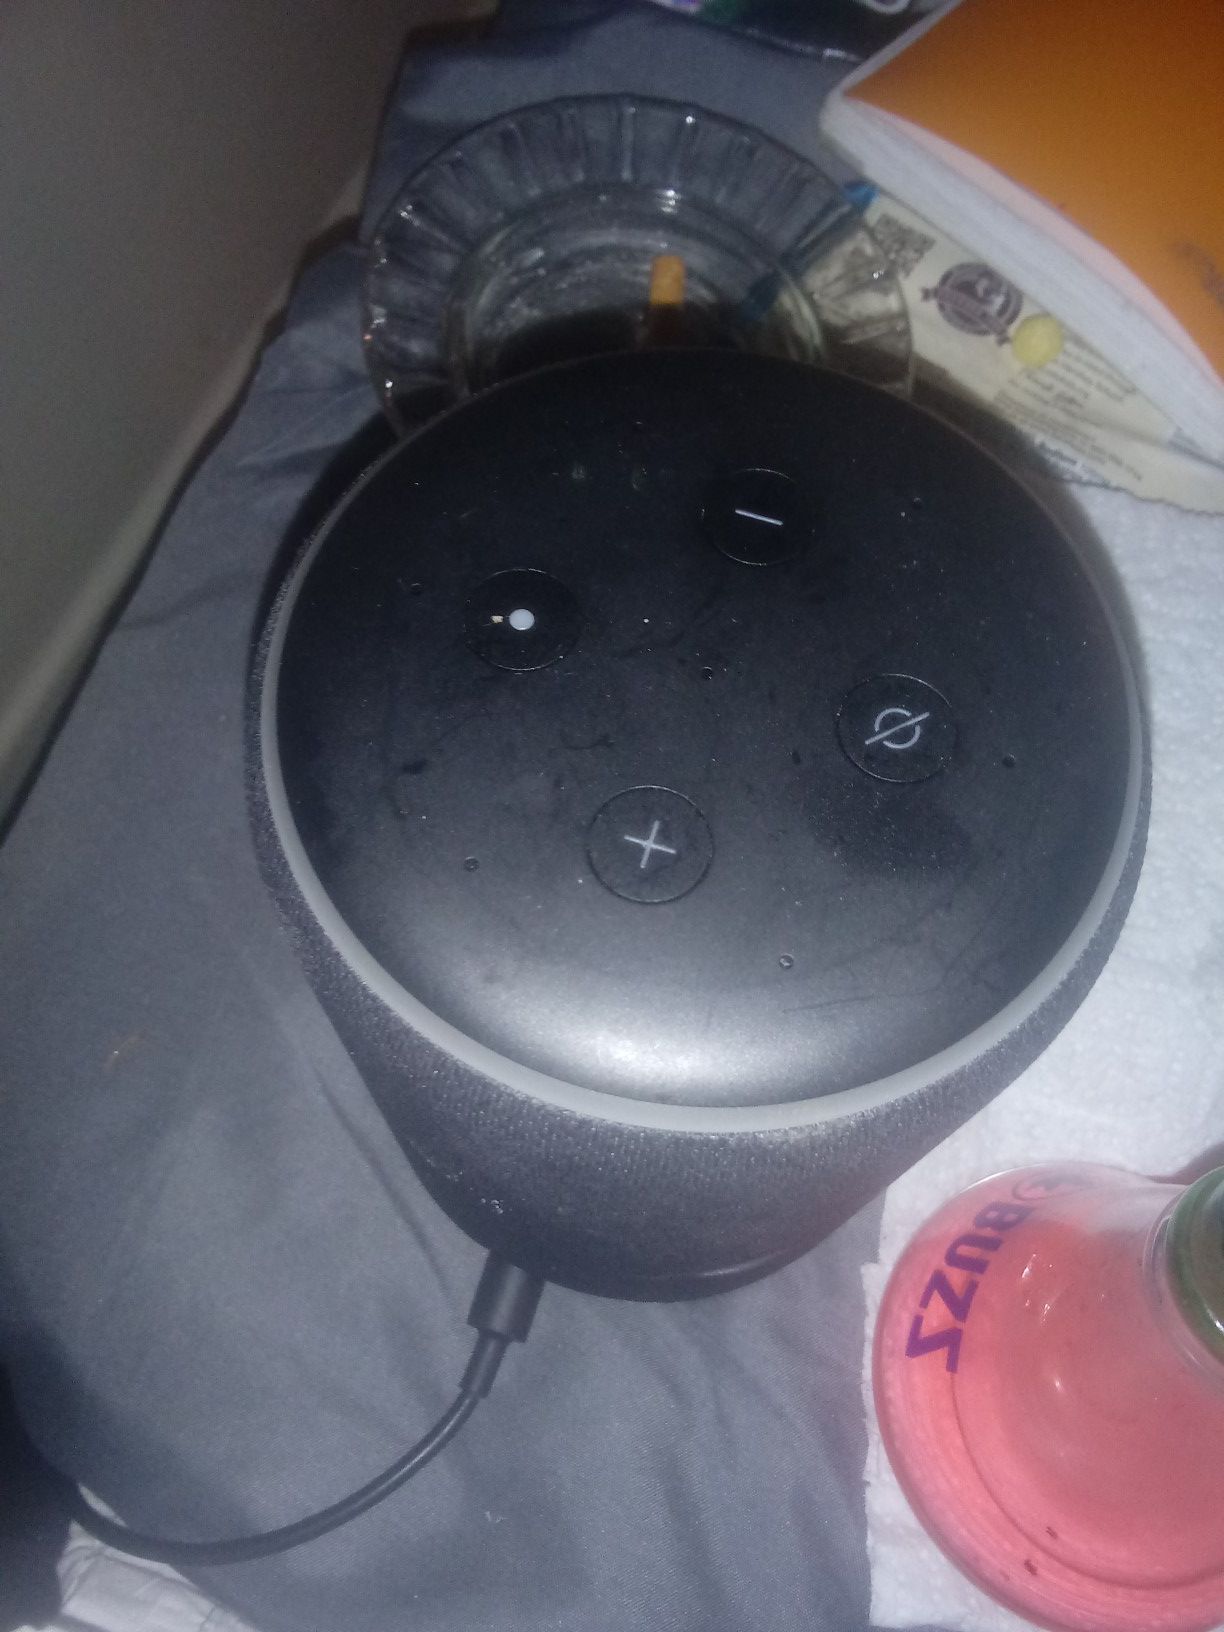 Alexa Echo Amazon Bluetooth Speaker